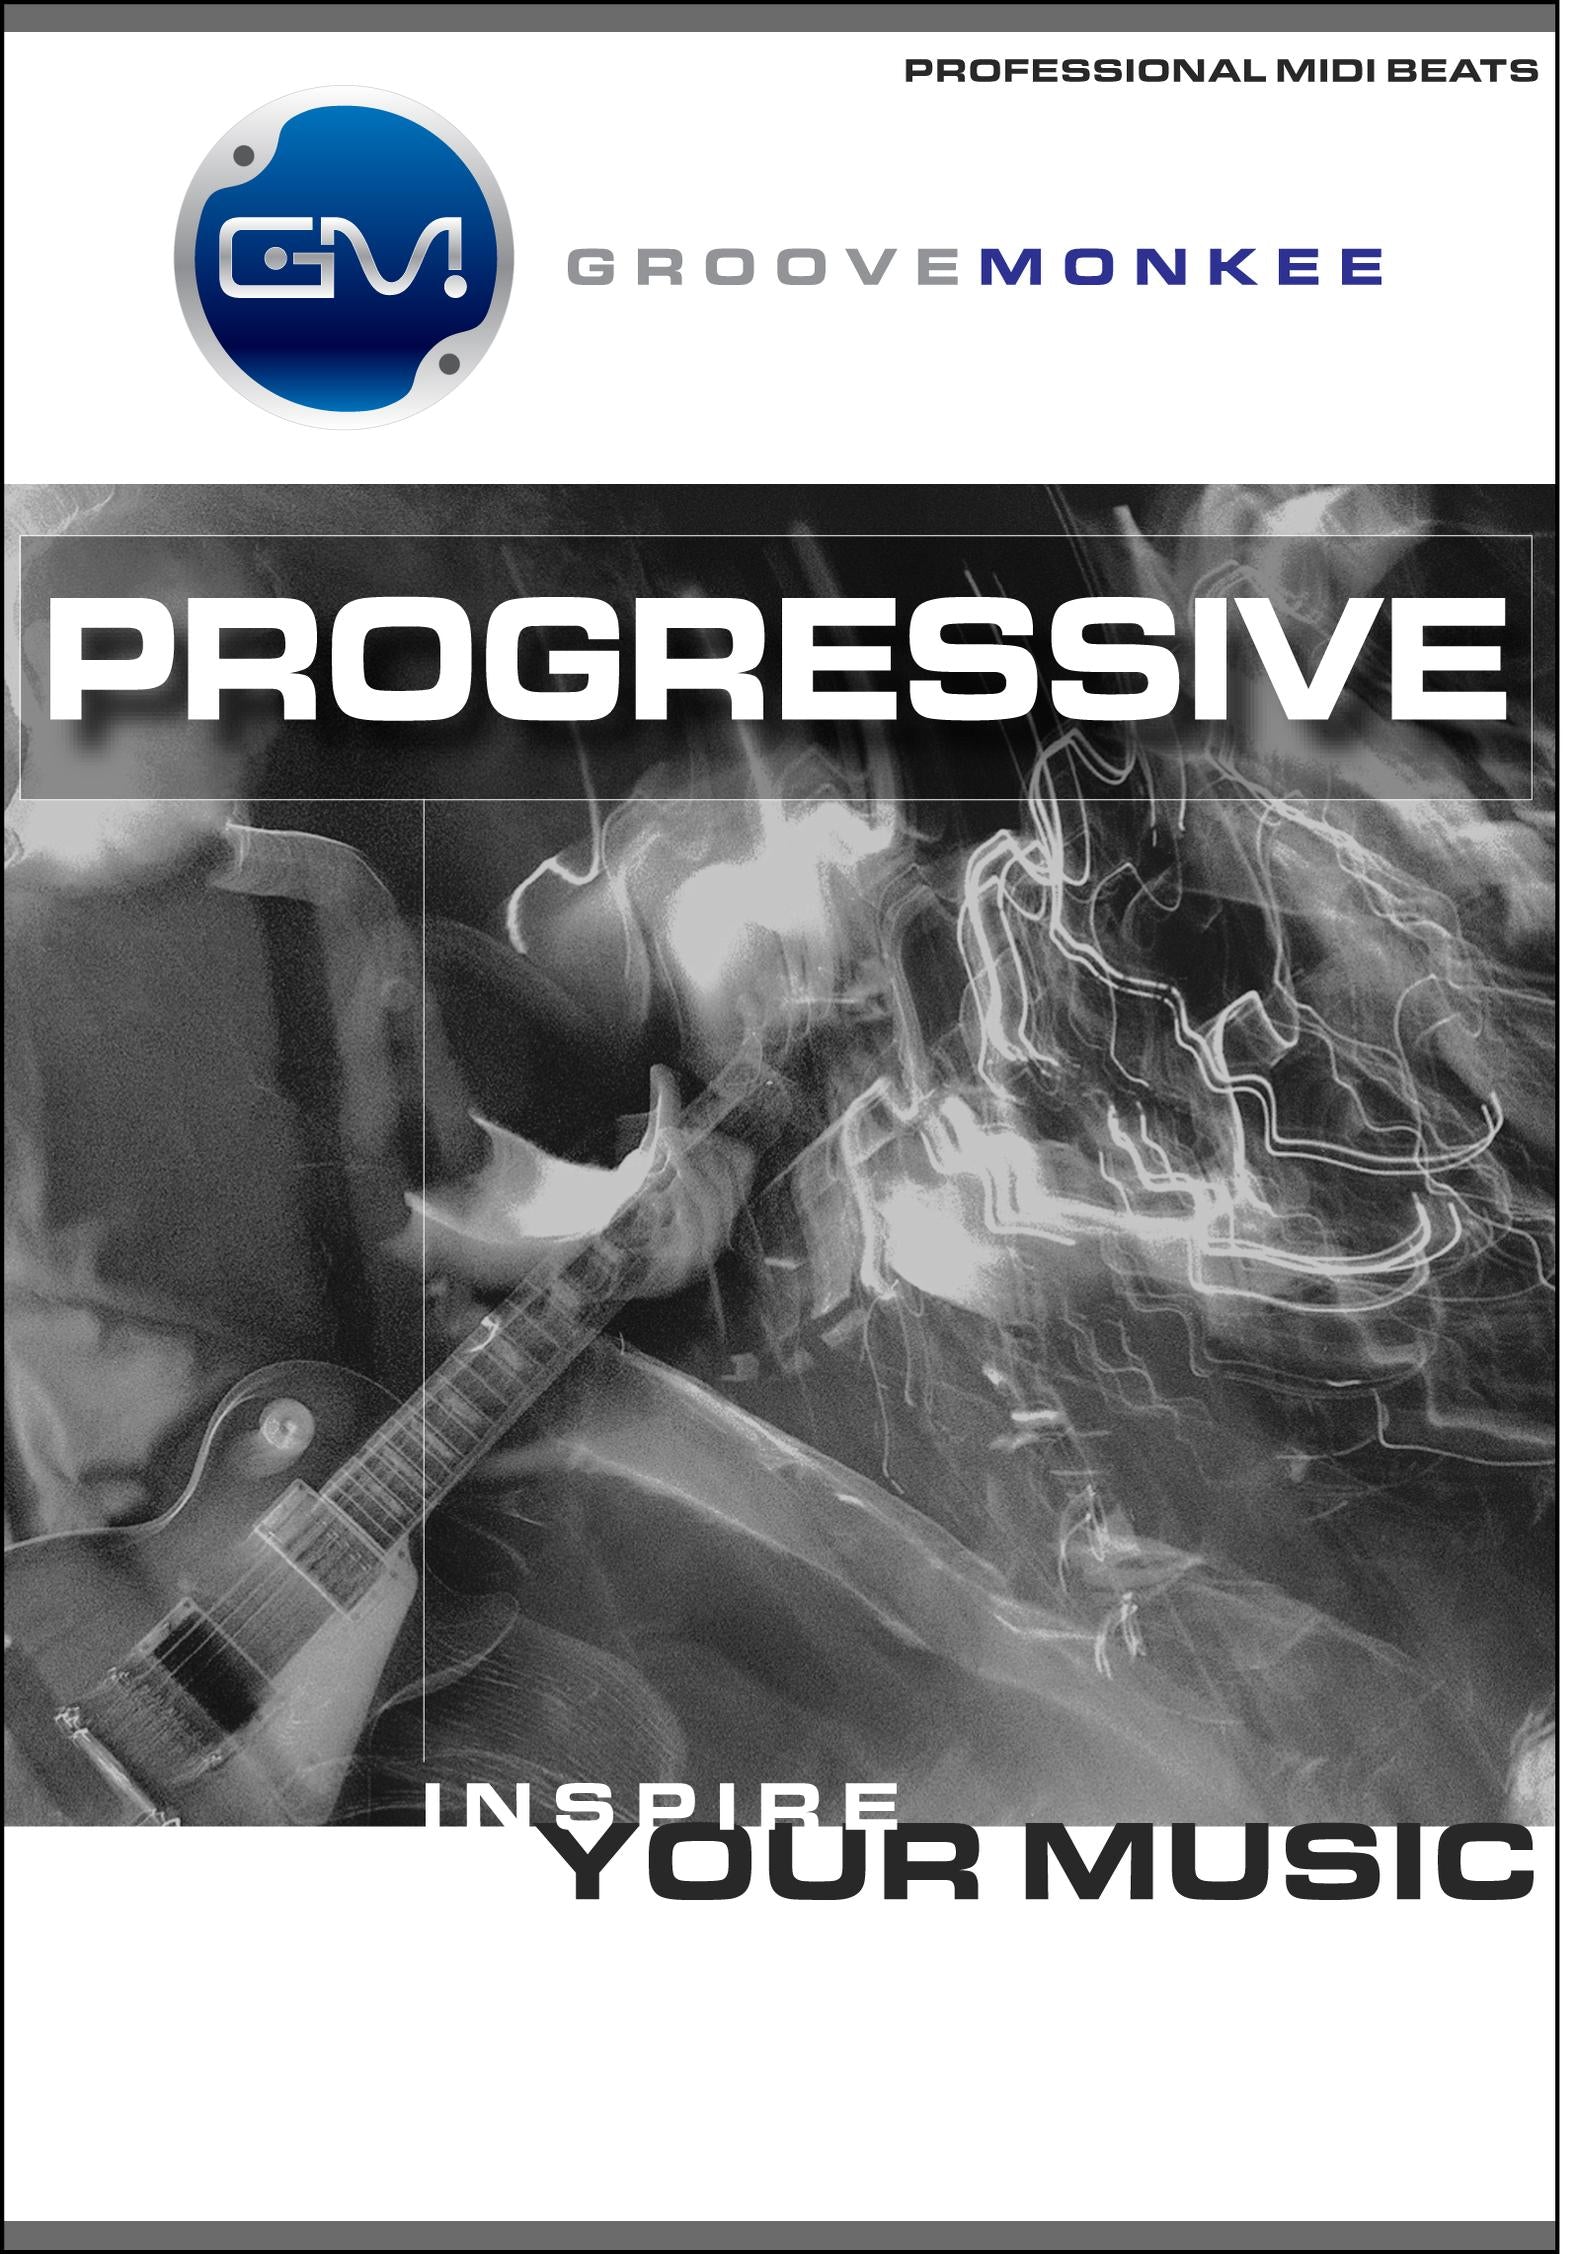 Progressive MIDI Drum Loops